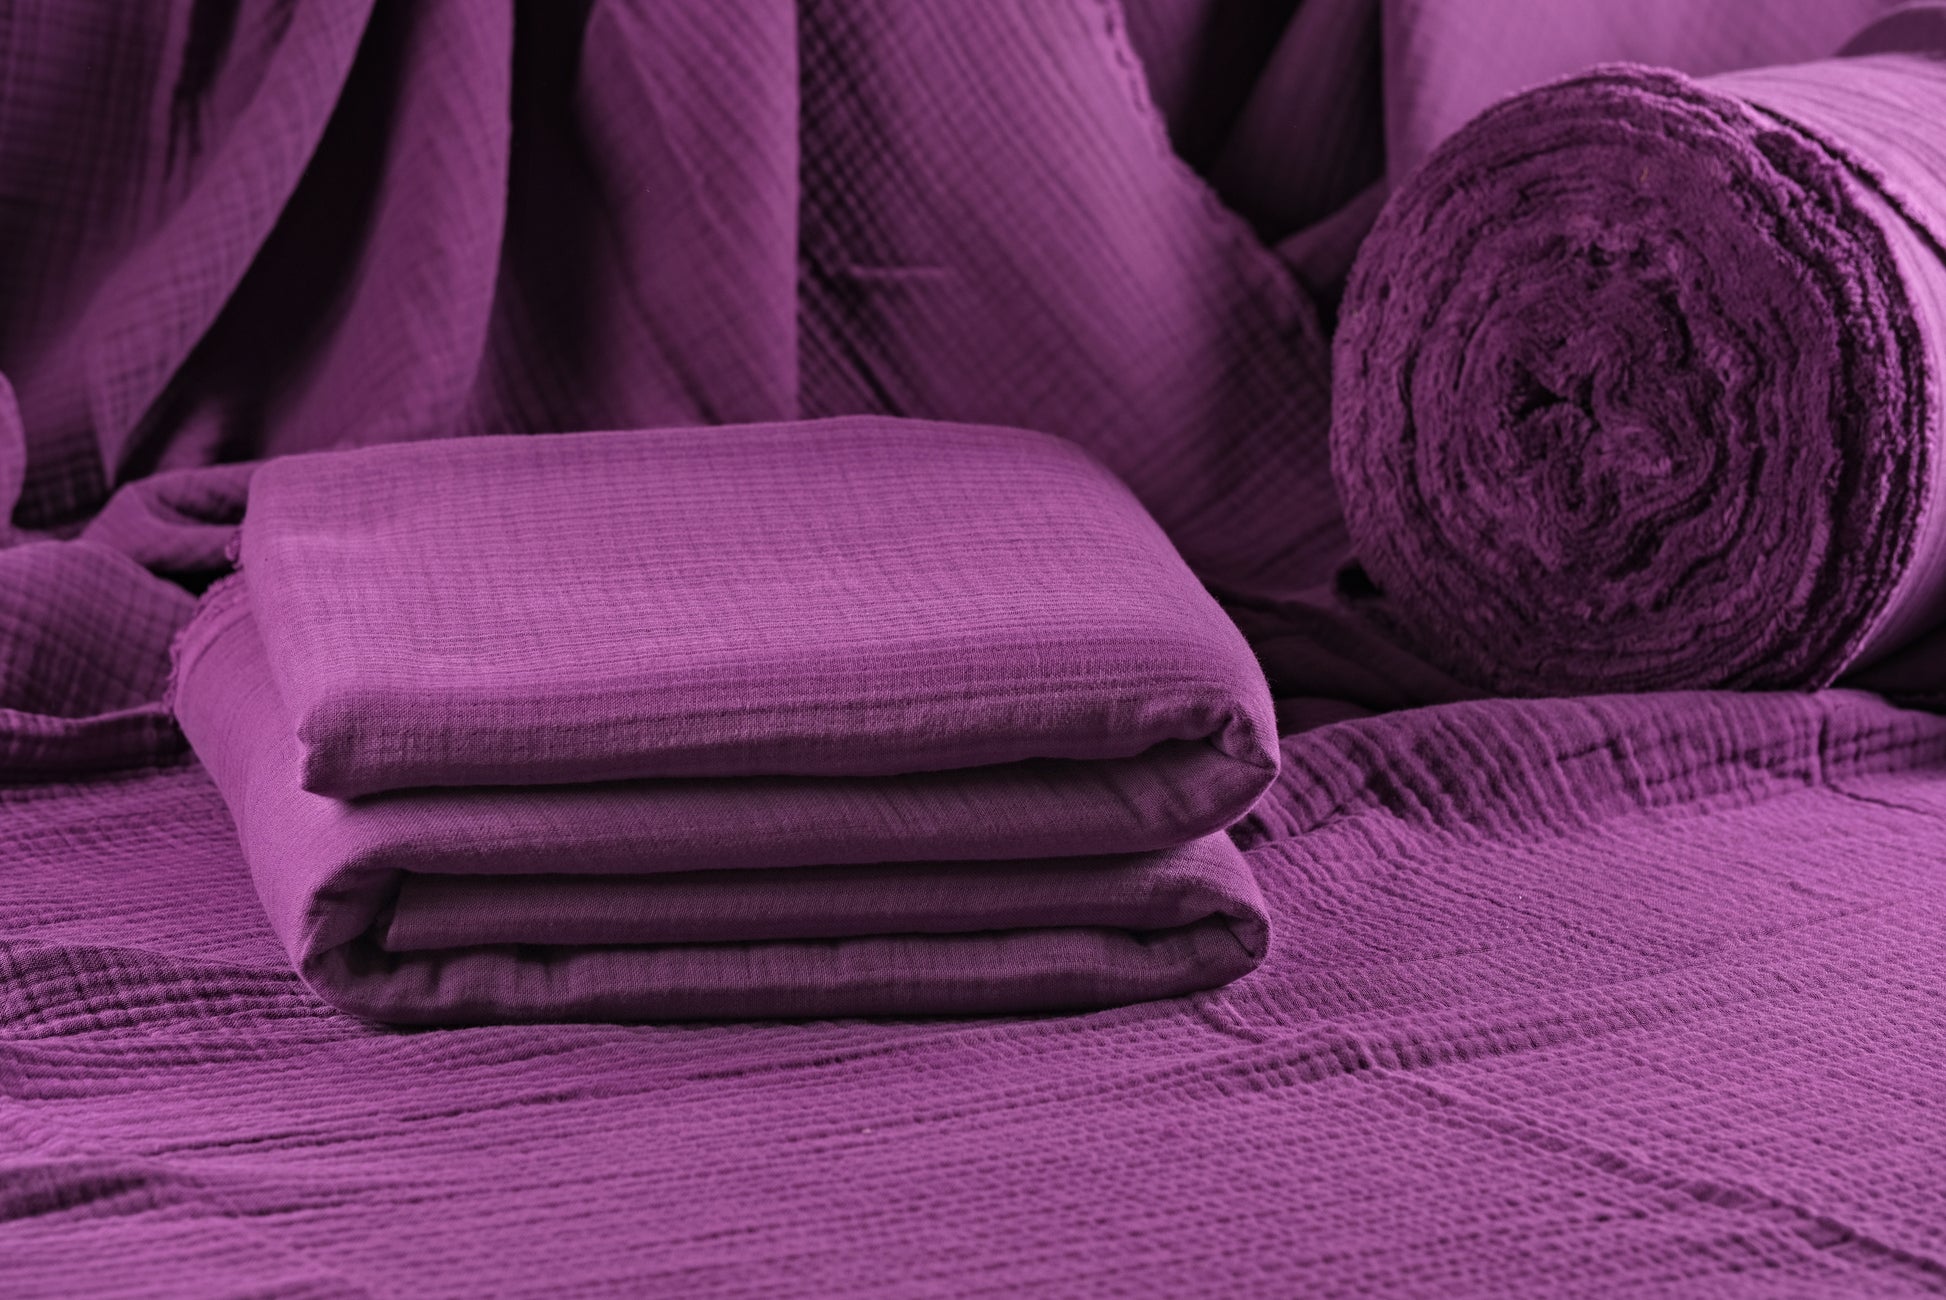 Purple Double Gauze Fabric  Buy Purple Crinkle Cotton Dress Fabric